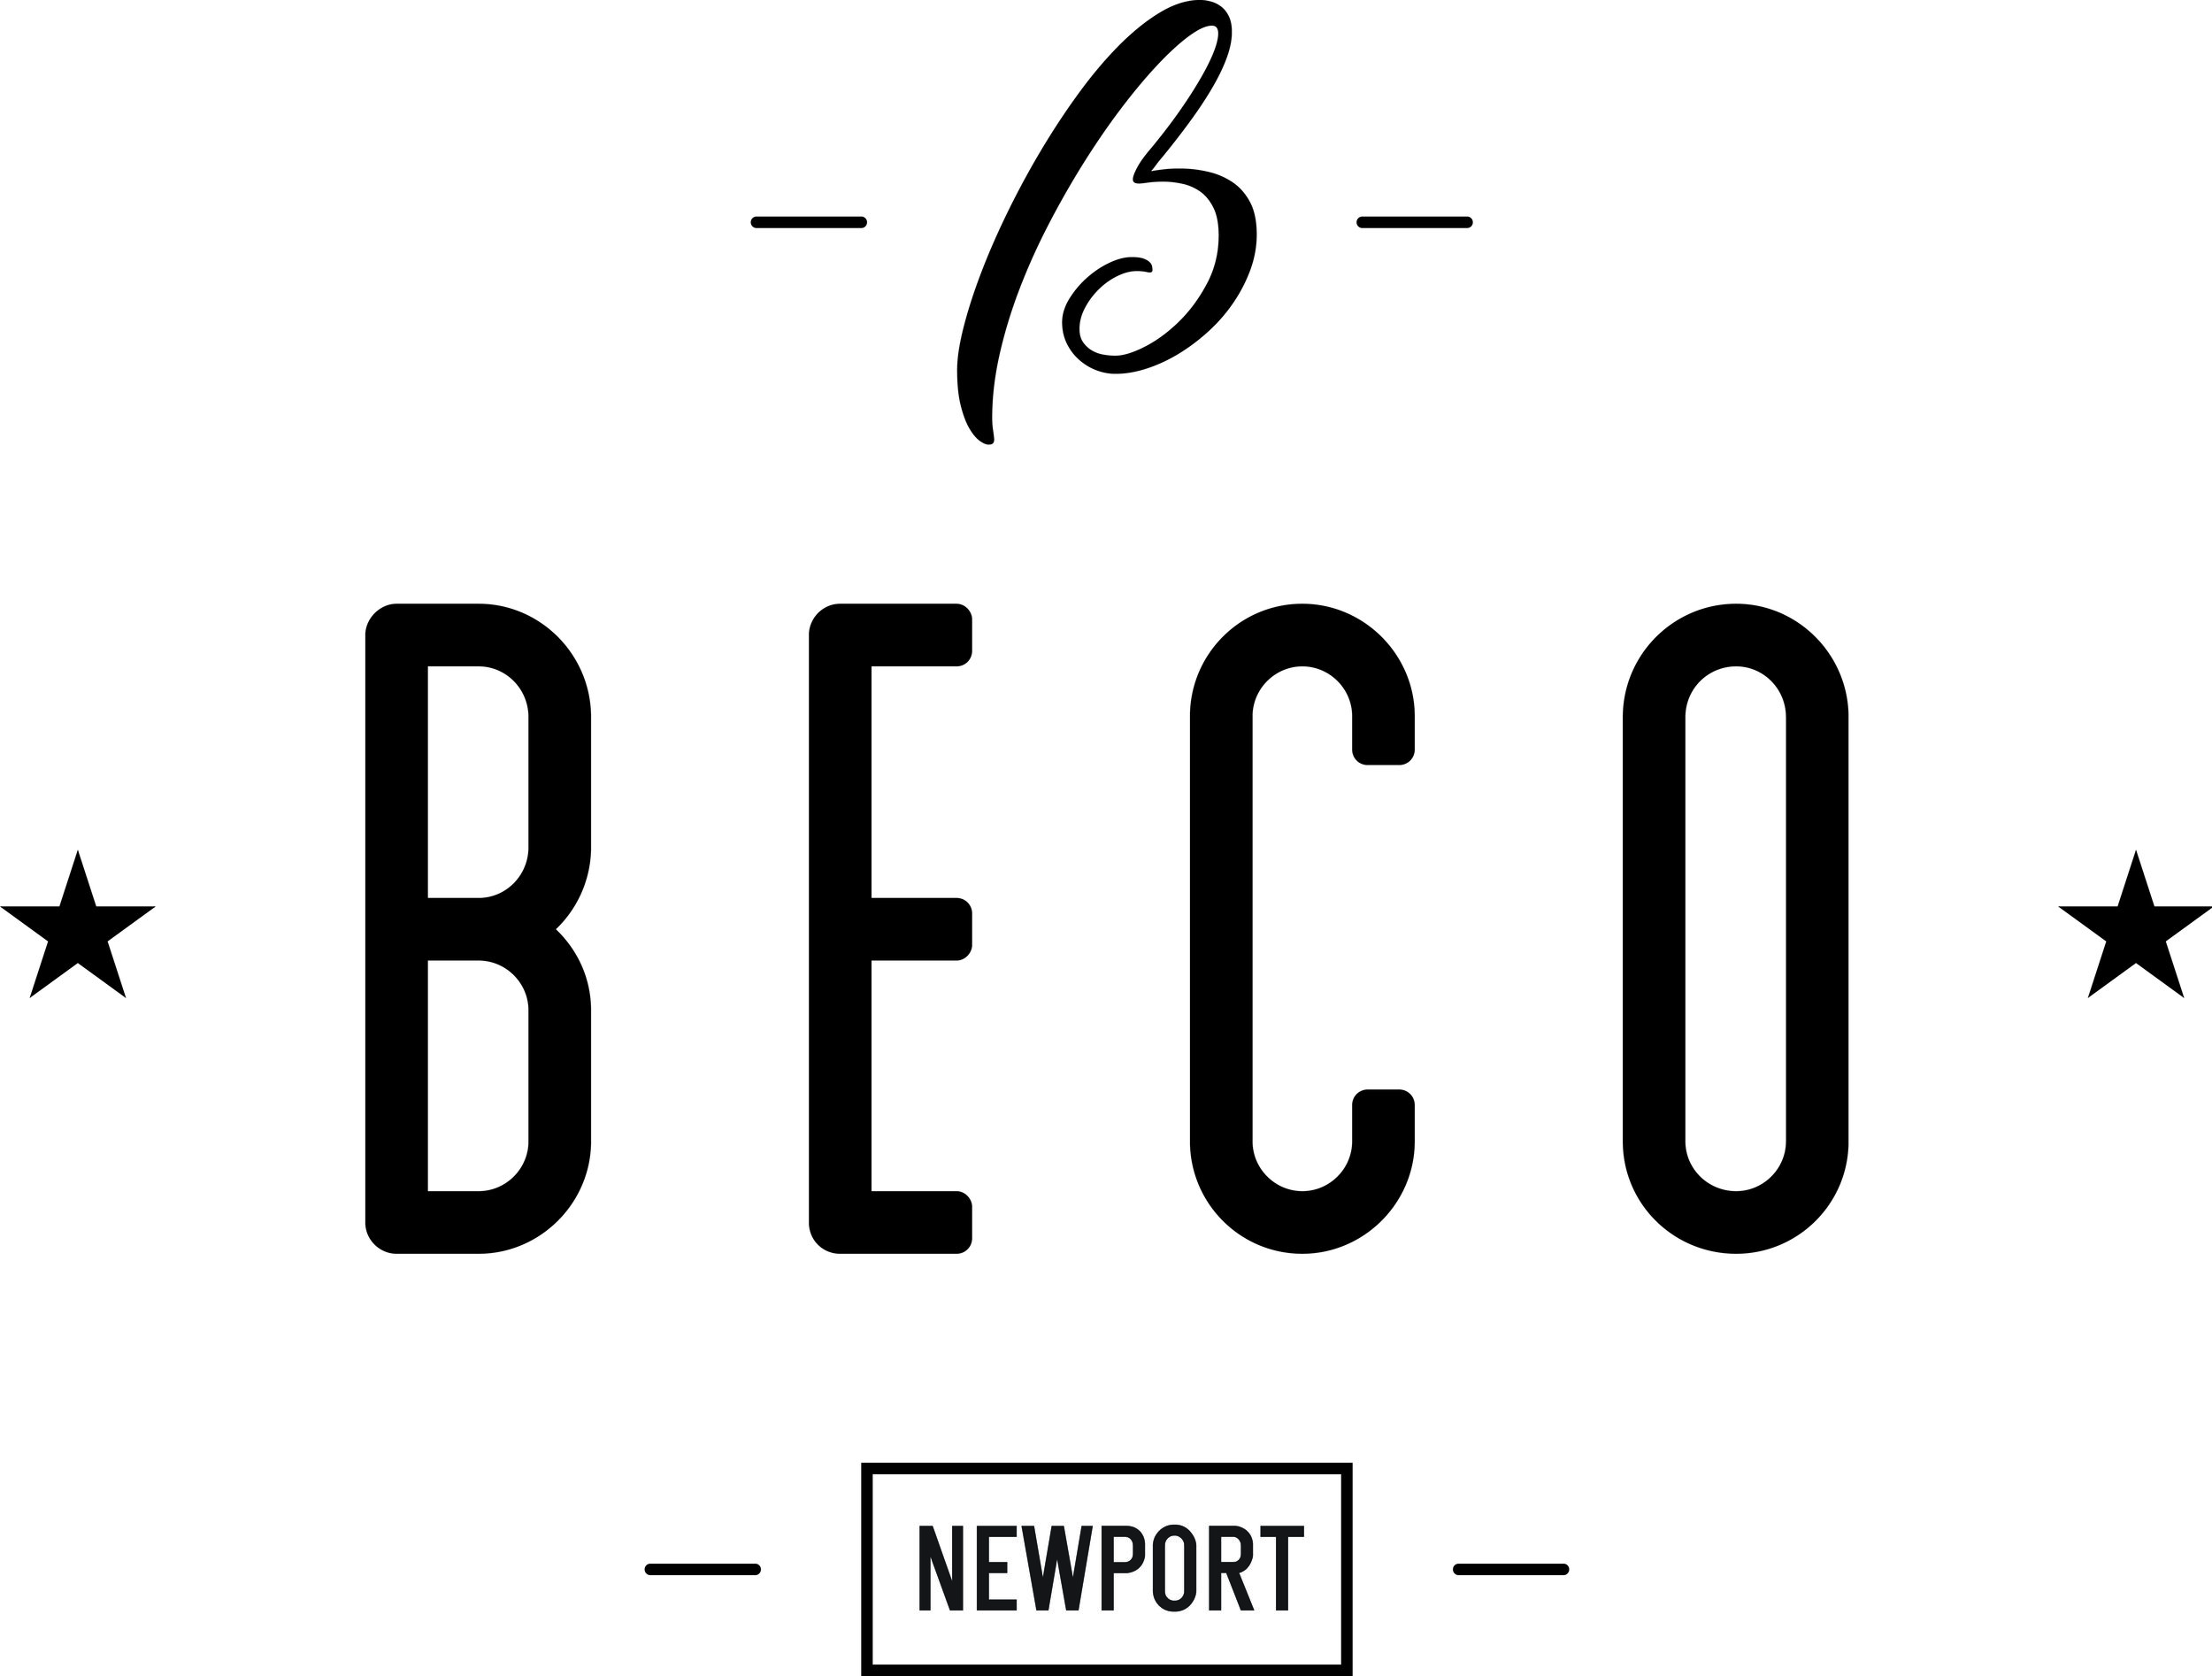 Beco_Newport_Logo.jpg